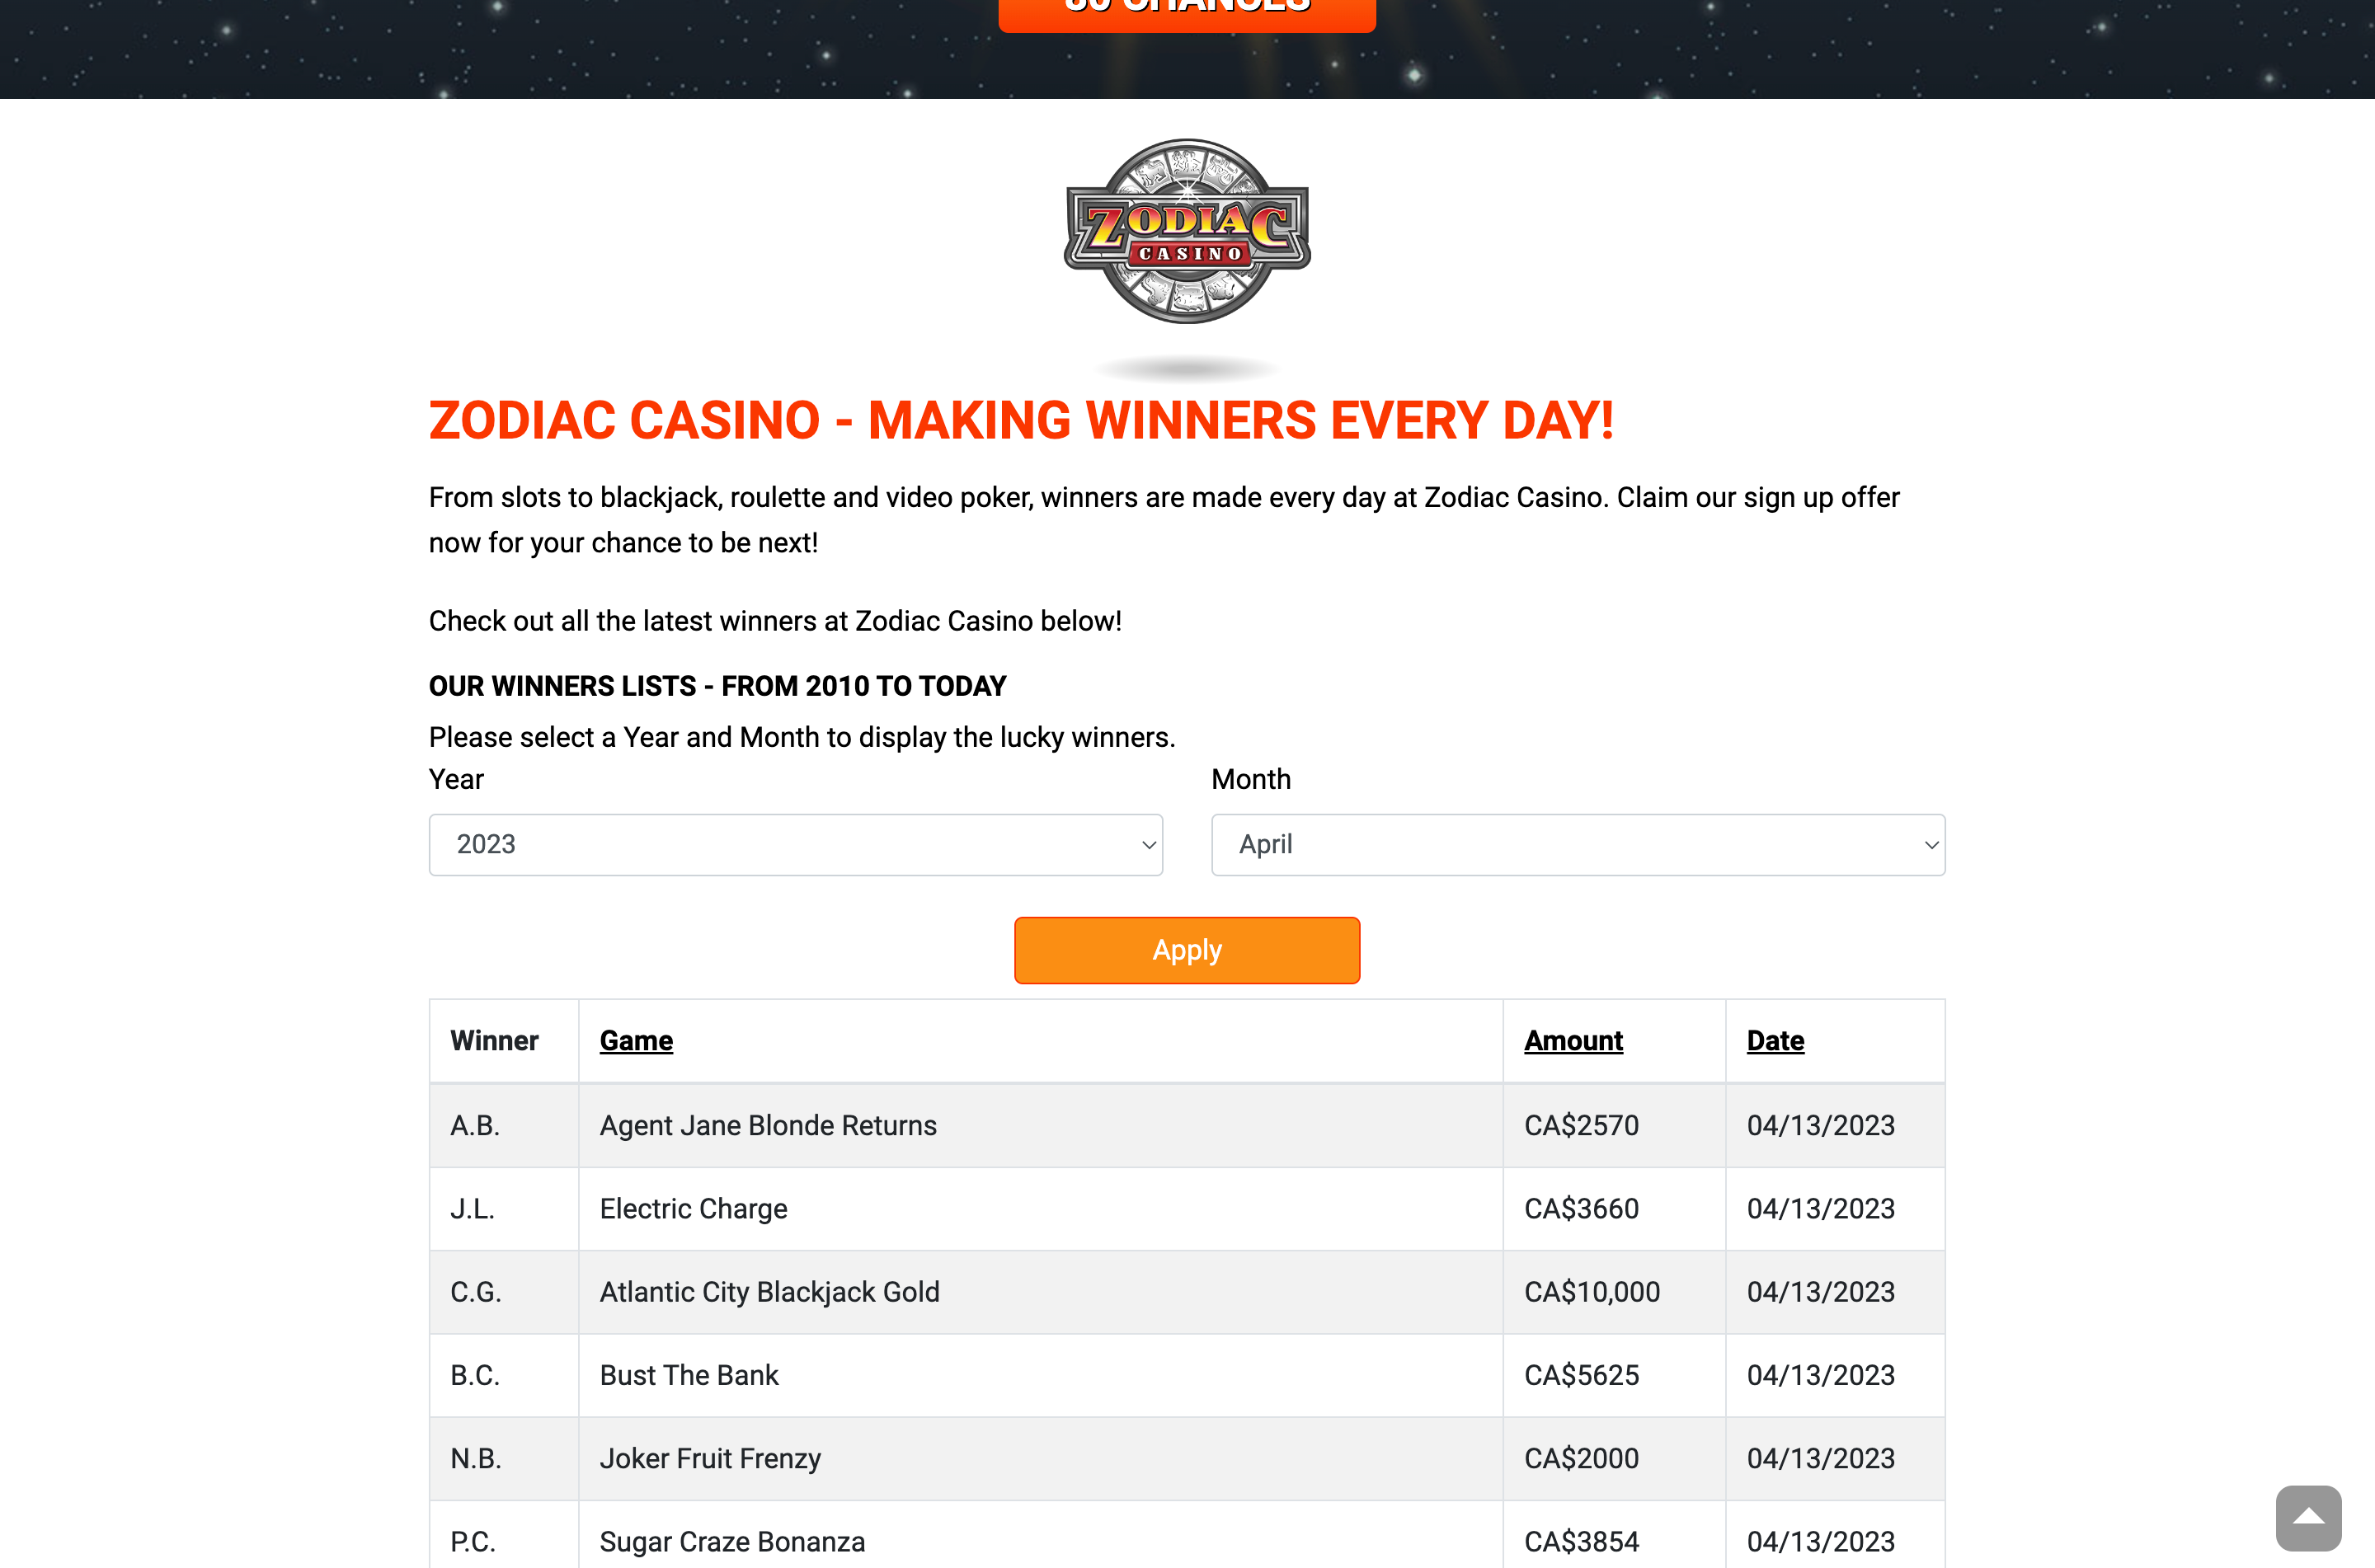 Zodiac Casino winners list